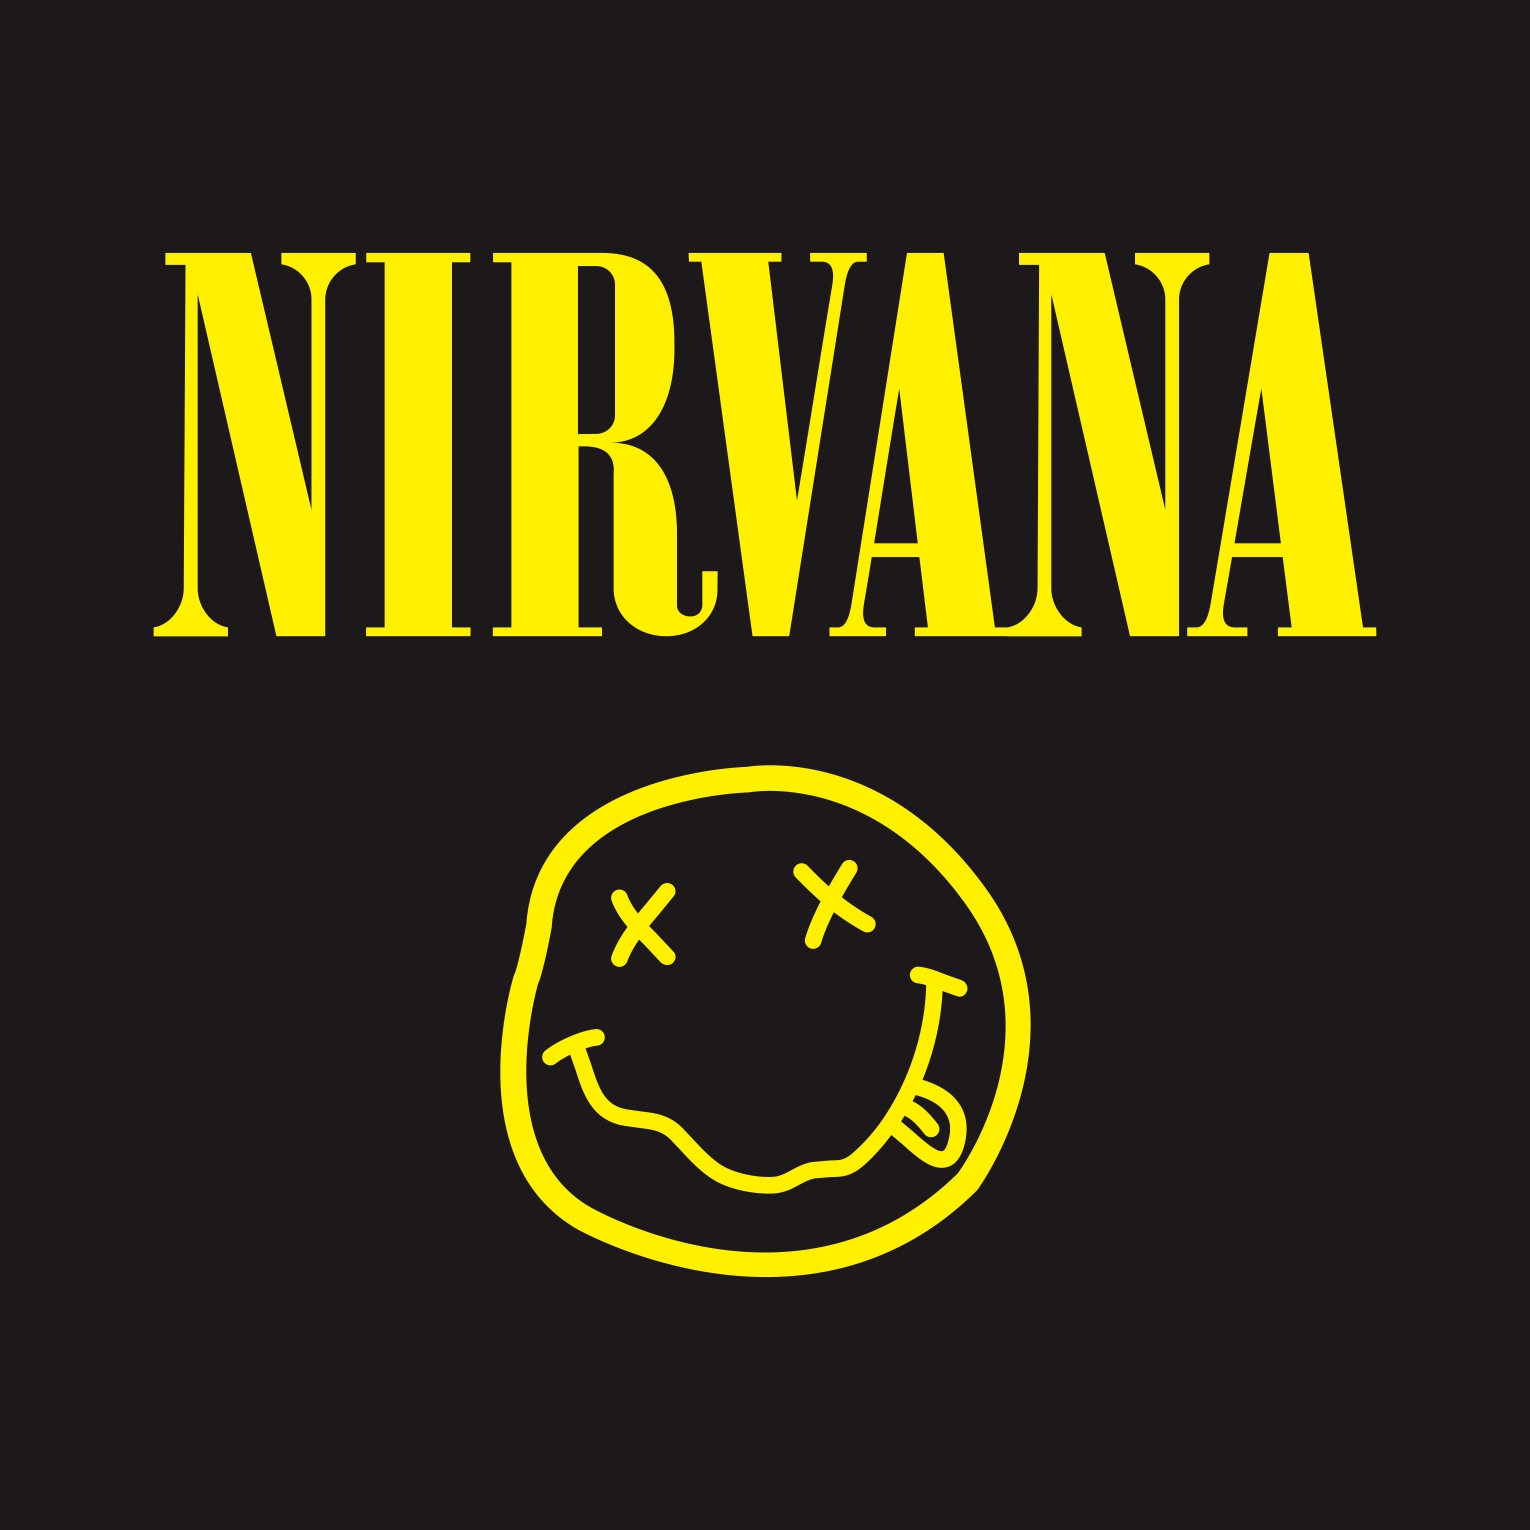 Nirvana amara. Нирвана группа. Нирвана эмблема группы. Вики группа Нирвана. Группа Нирвана имена.